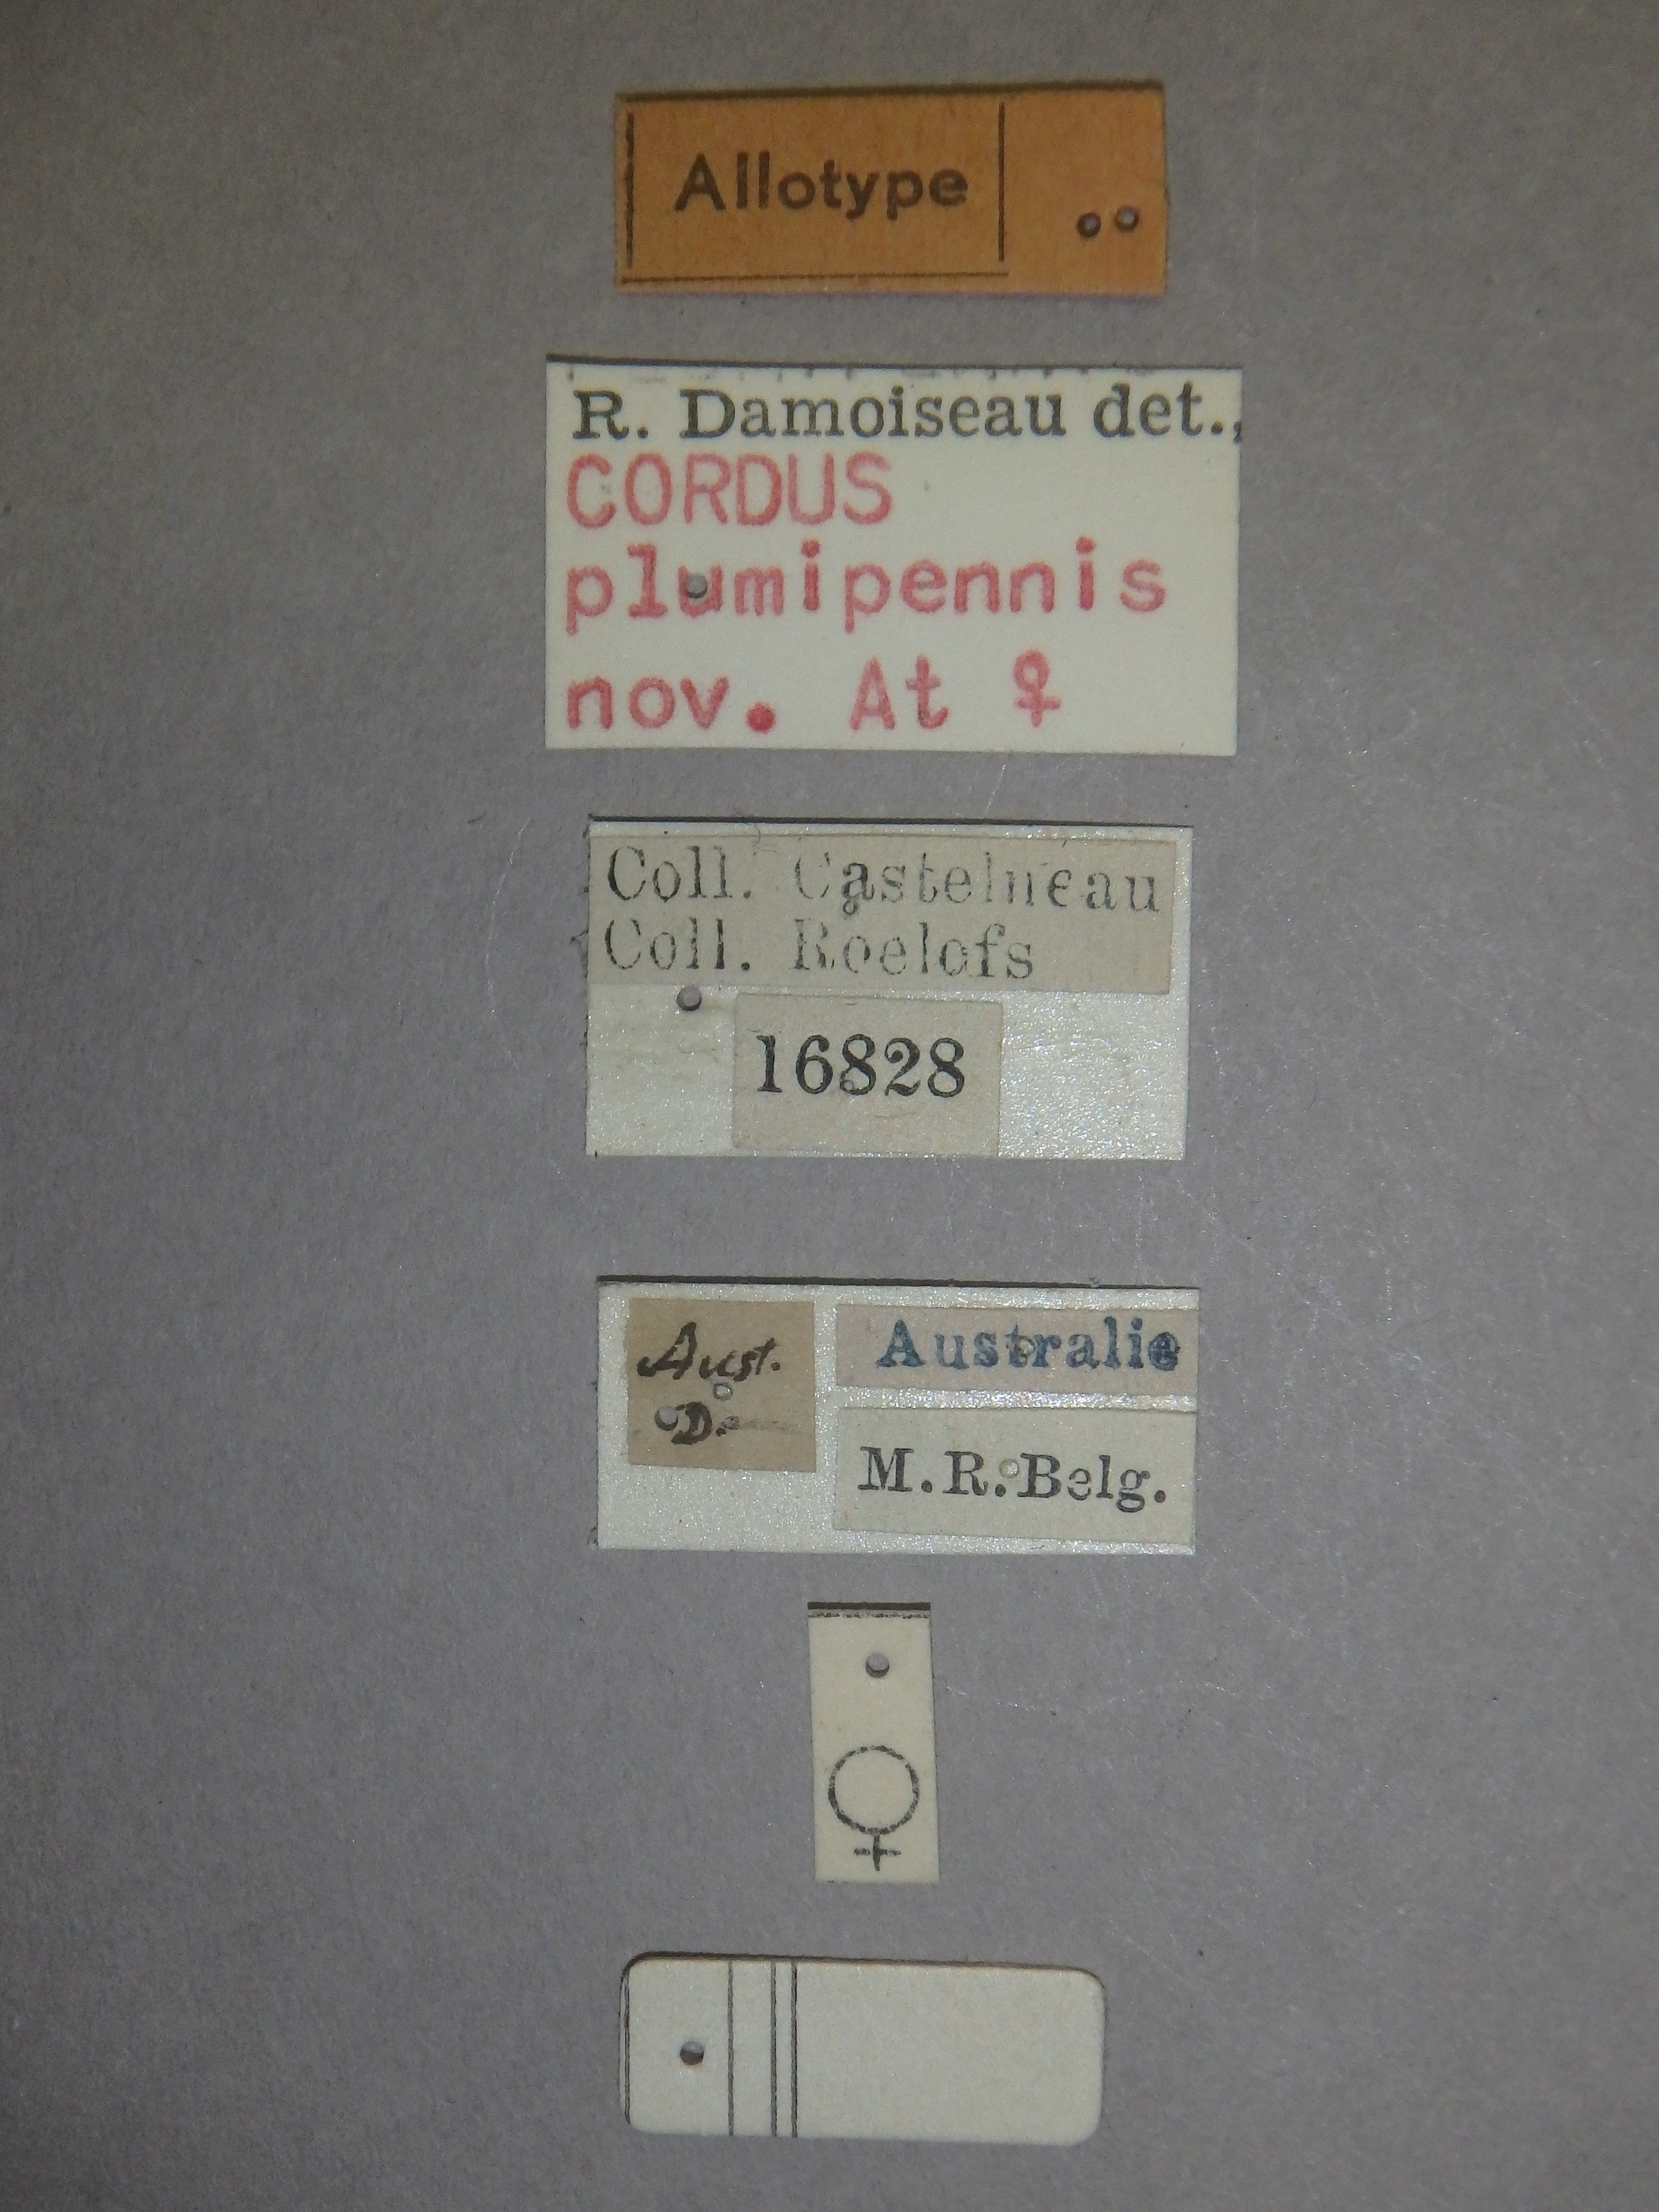 Cordus plumipennis at Labels.jpg